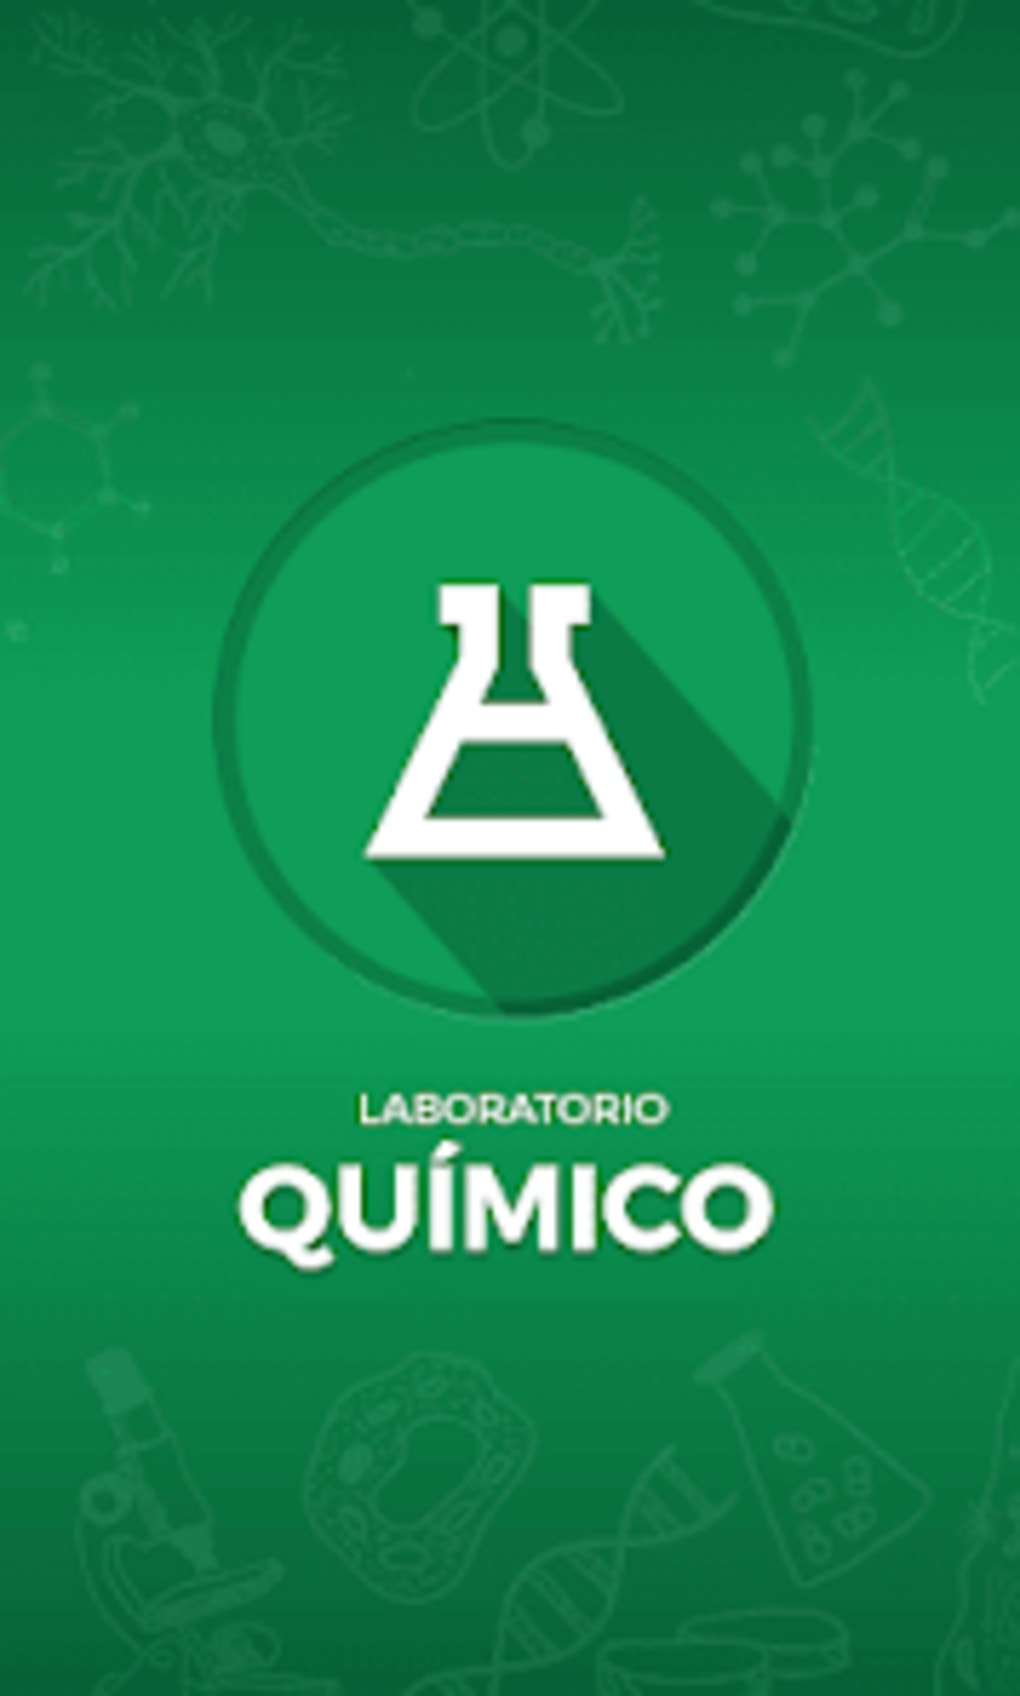 Laboratorio de Química for Android - Download